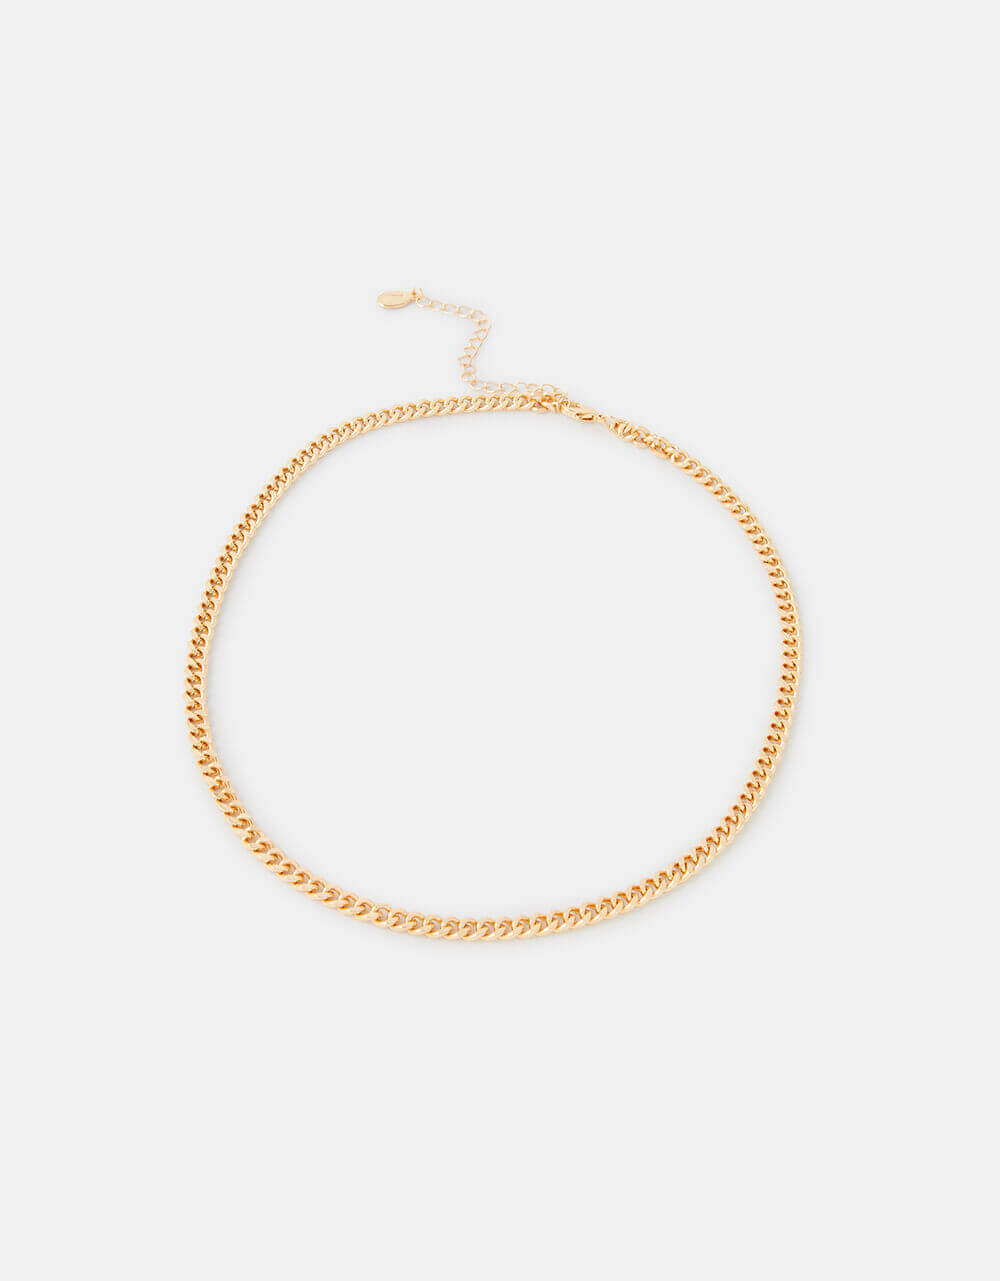 Accessorize Simple Small Chain Necklace